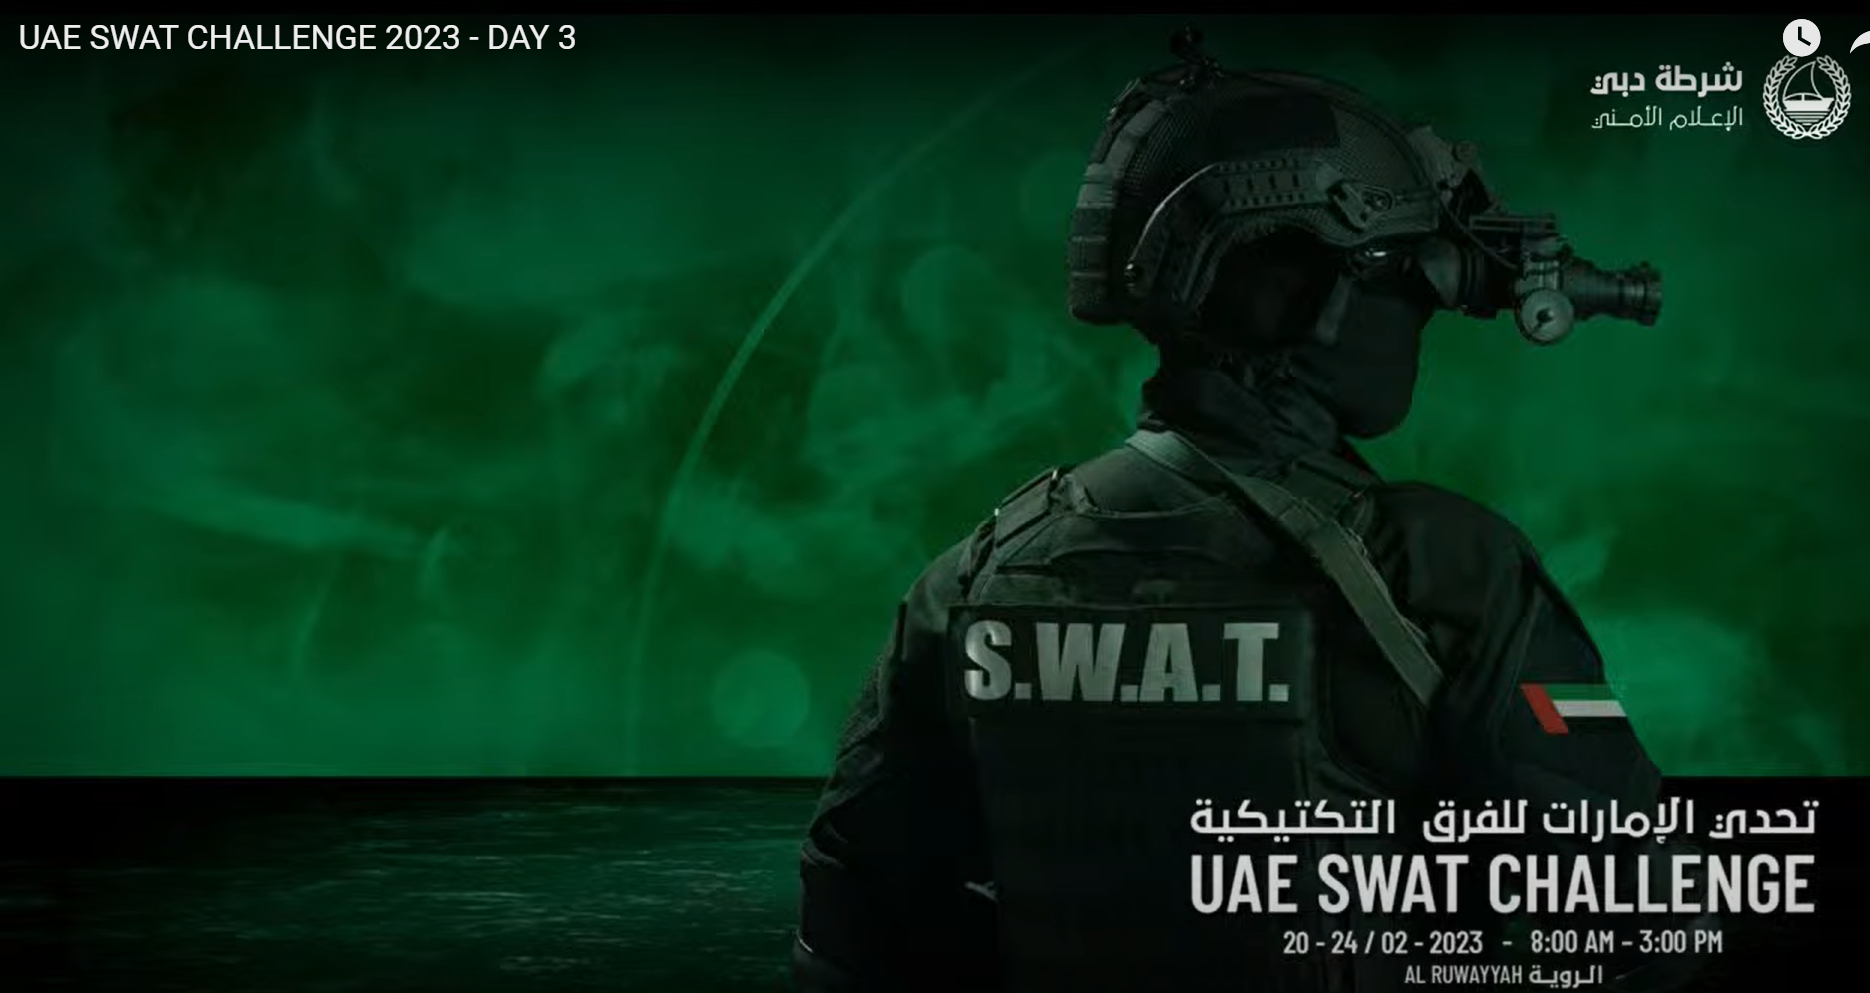 UAE SWAT CHALLENGE 2023 - DAY 3